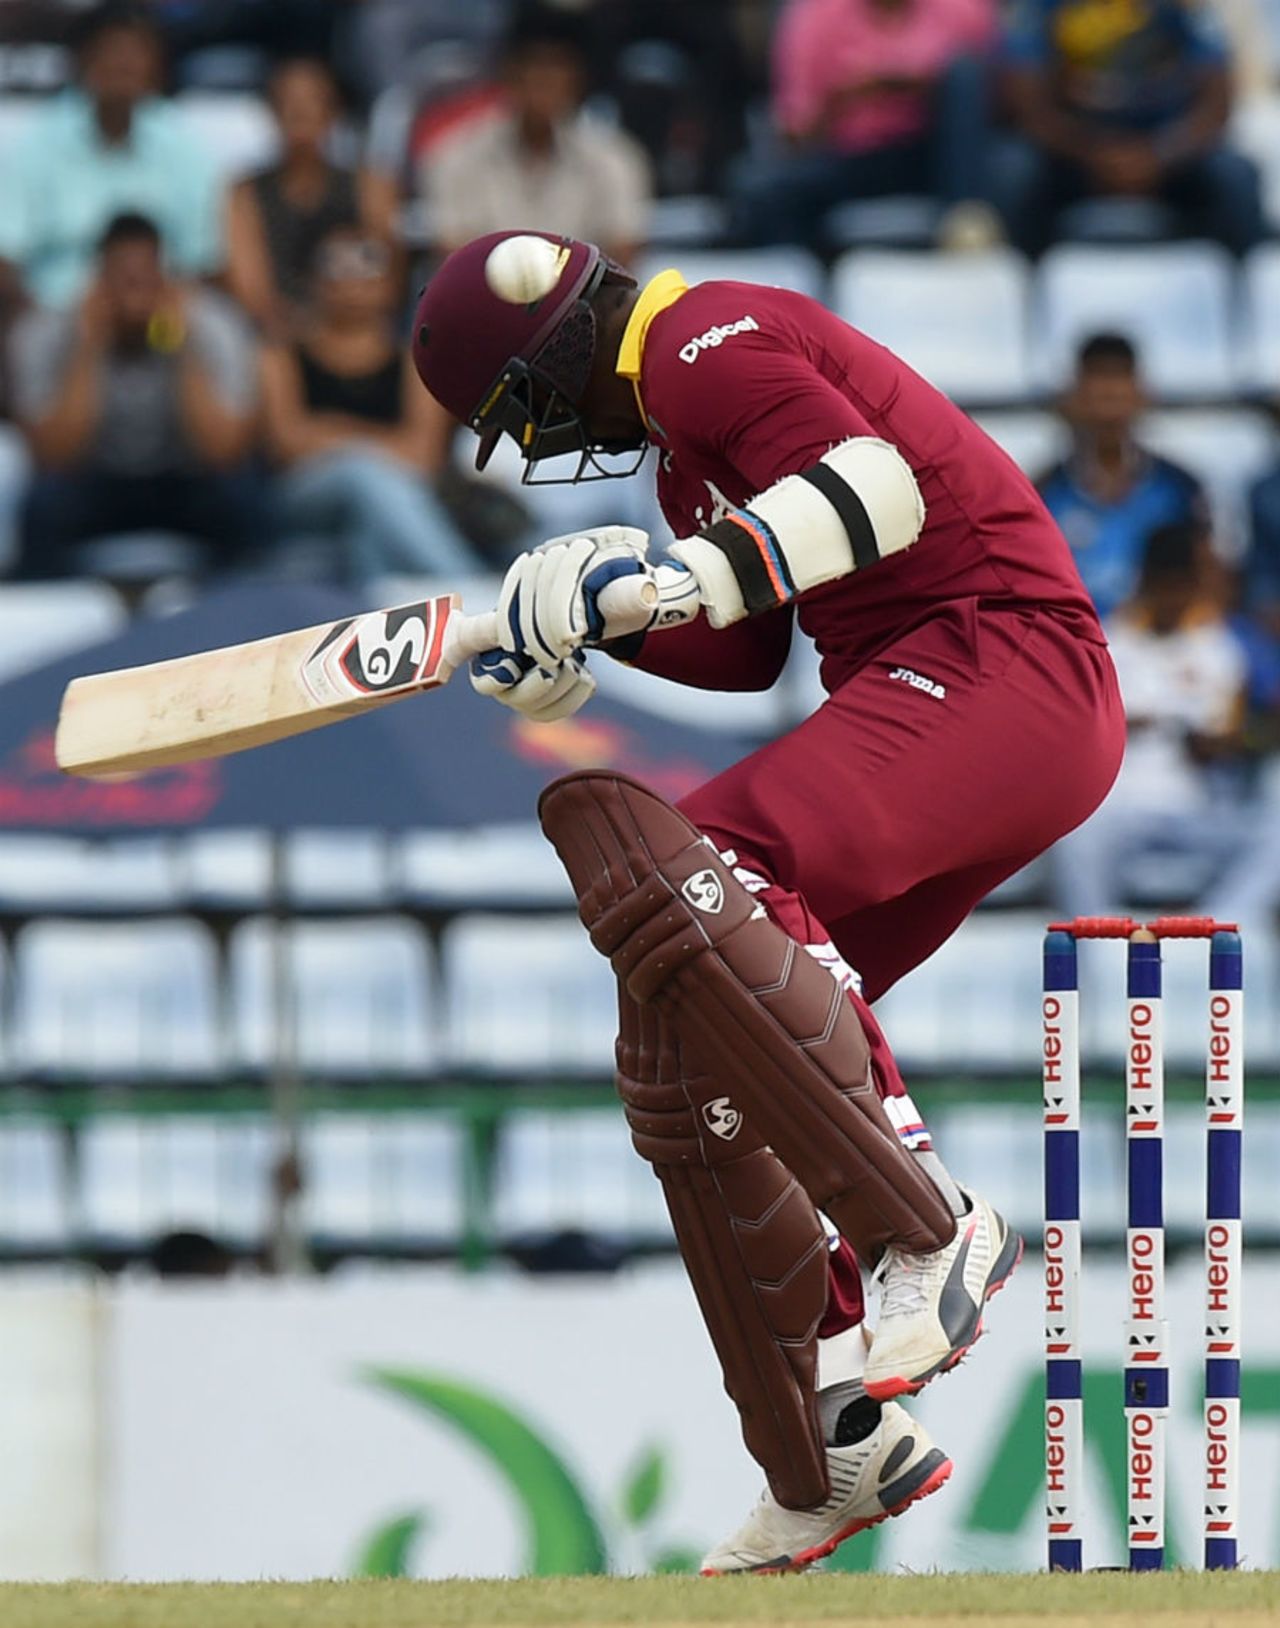 Marlons Samuels ducks a bouncer during his rearguard innings, Sri Lanka v West Indies, 3rd ODI, Pallekele, November 7, 2015